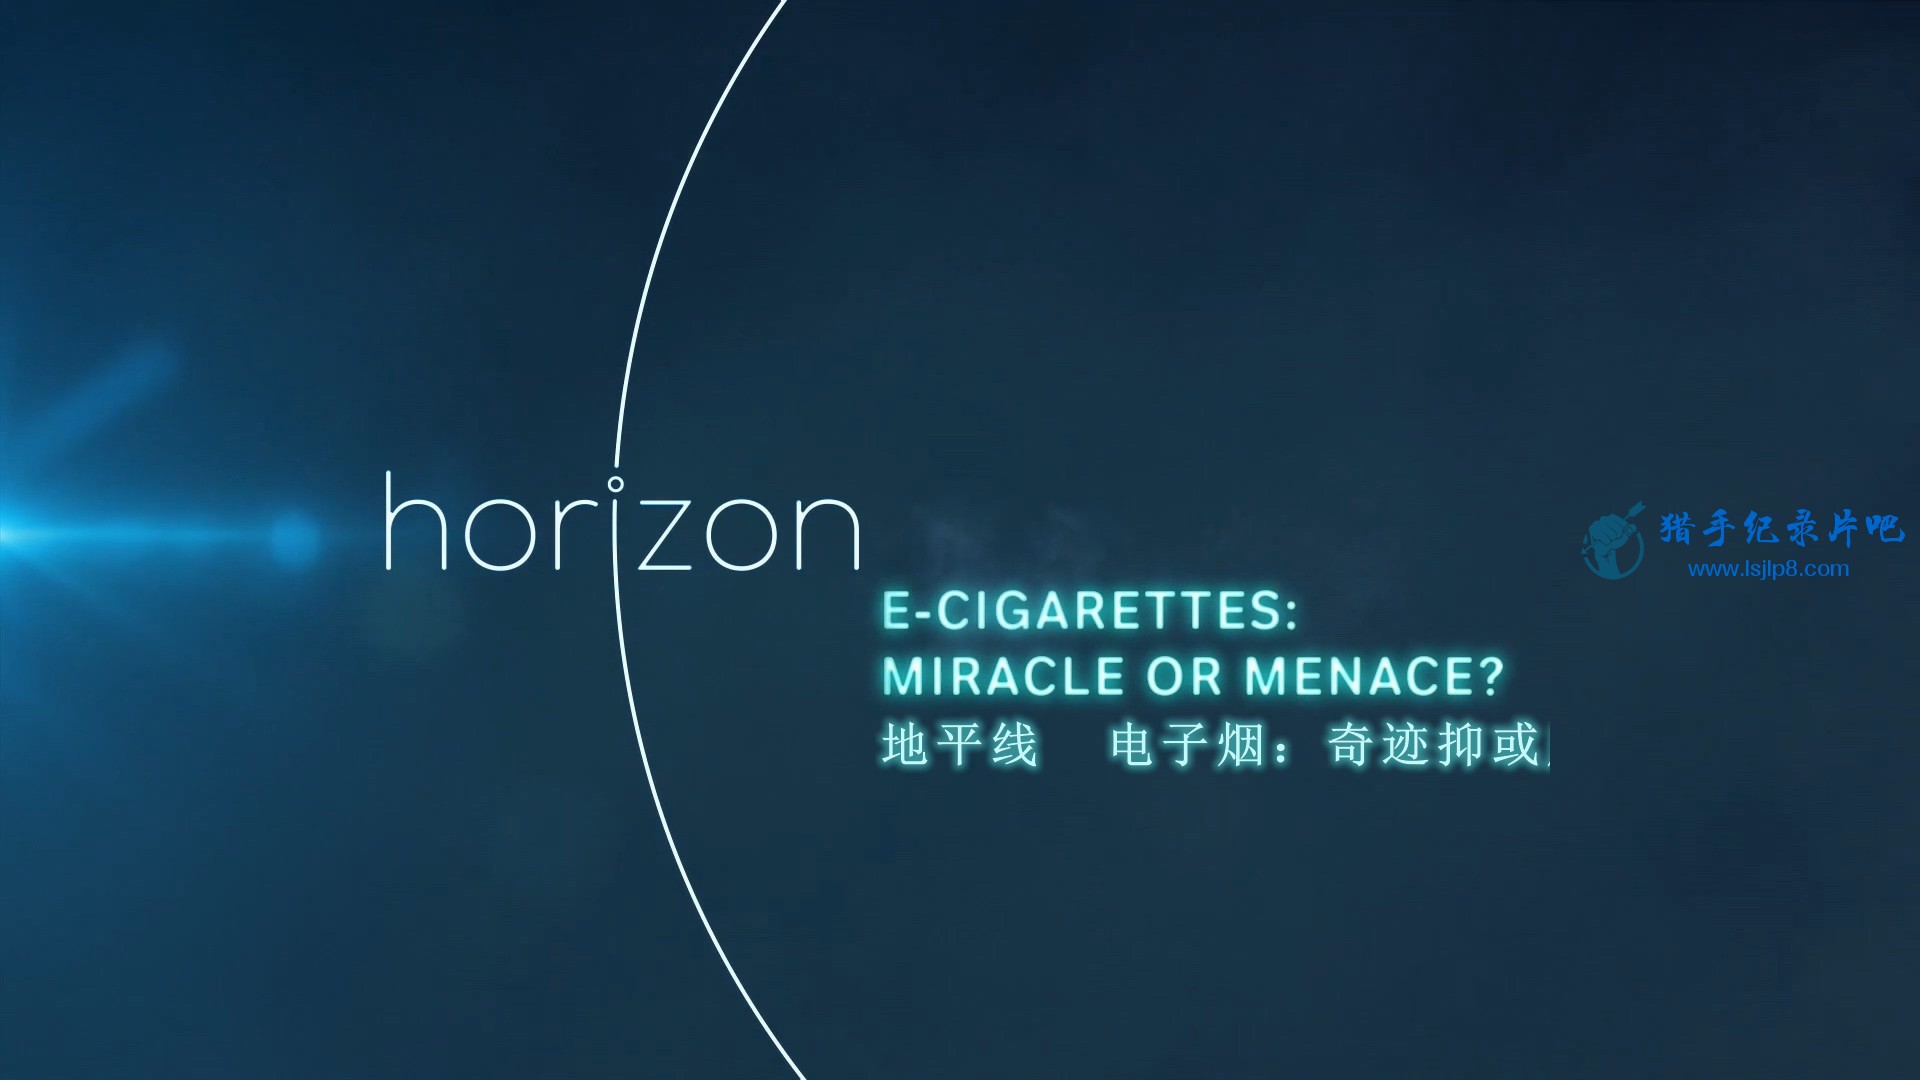 BBC.Horizon.2016.E-Cigarettes.Miracle.or.Menace.1080p.HDTV.x264.AAC.MVGroup.org..jpg